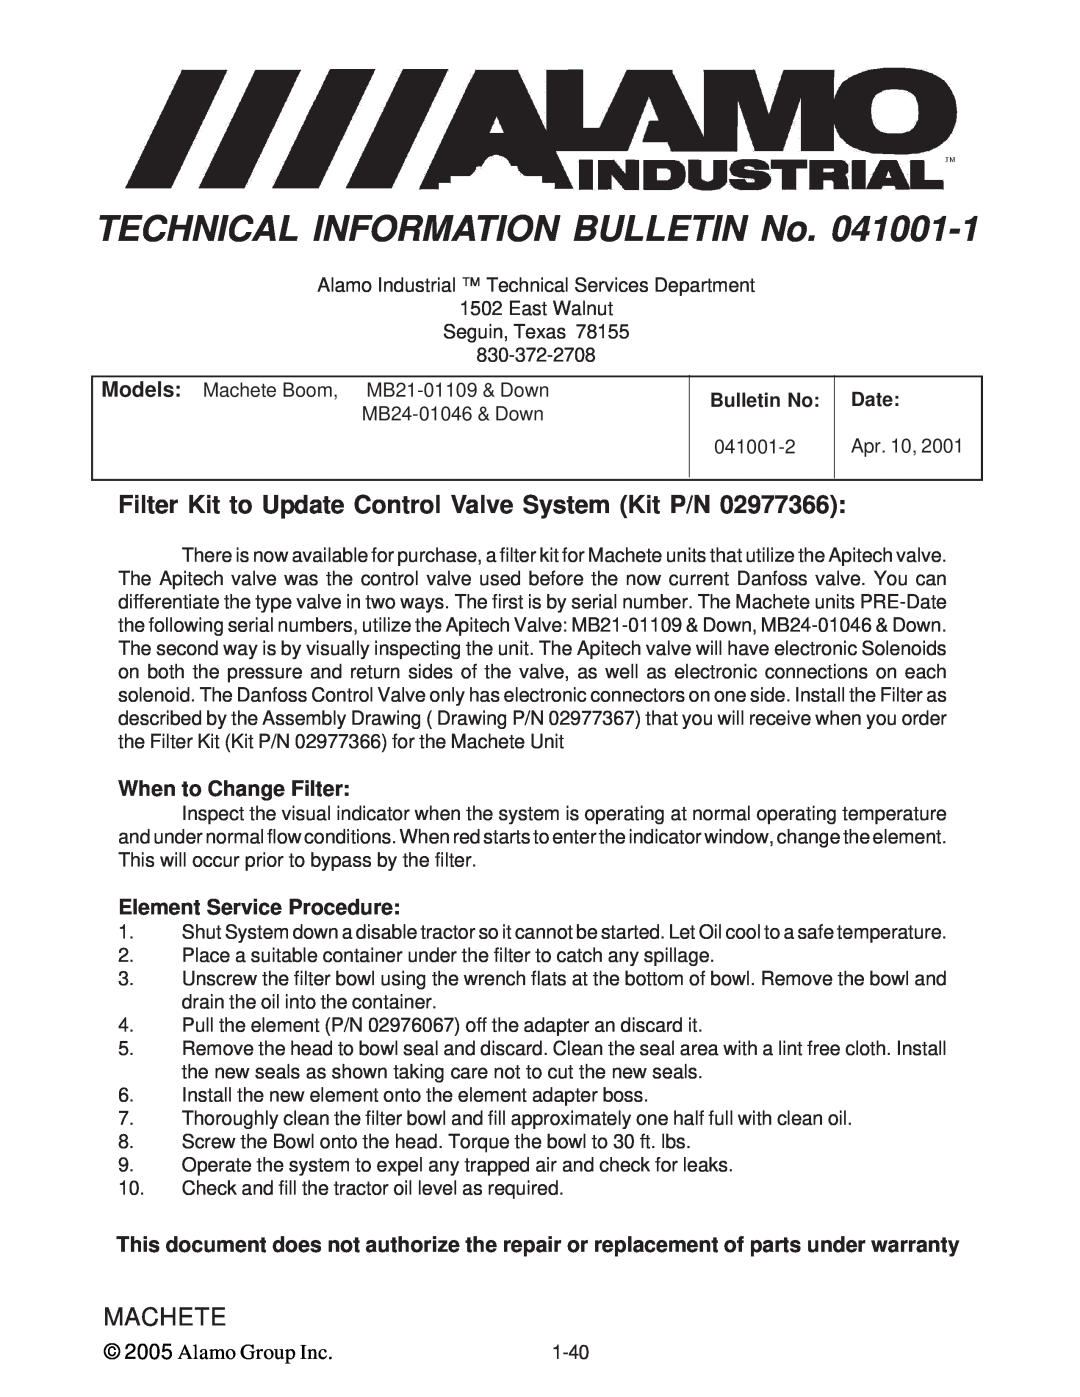 Alamo T 7740 Filter Kit to Update Control Valve System Kit P/N, TECHNICAL INFORMATION BULLETIN No, Machete, Bulletin No 